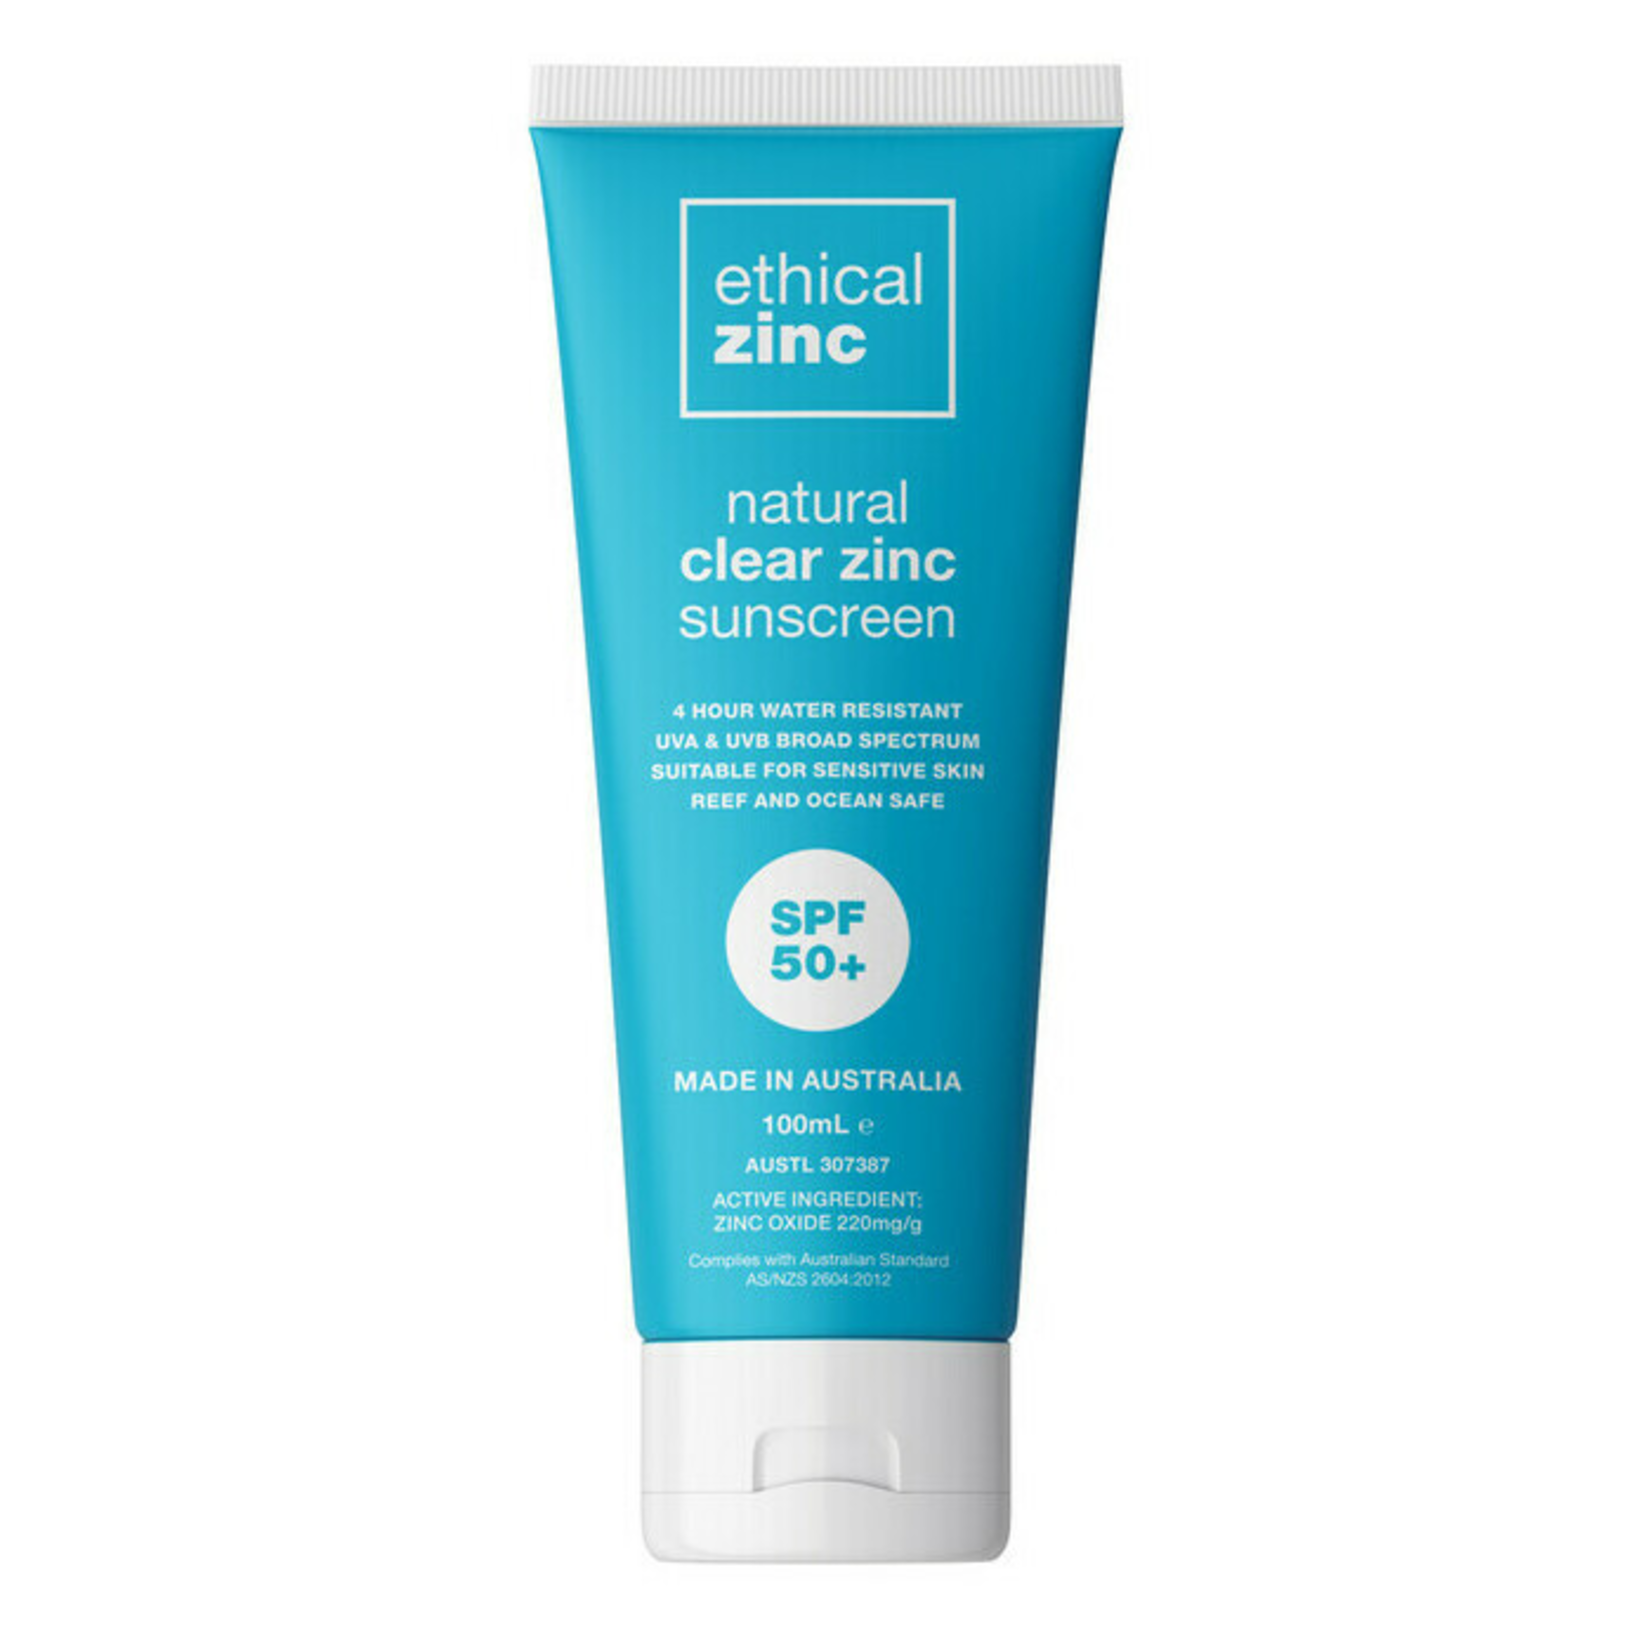 Ethical Zinc Ethical Zinc Natural Clear Zinc Sunscreen 100g